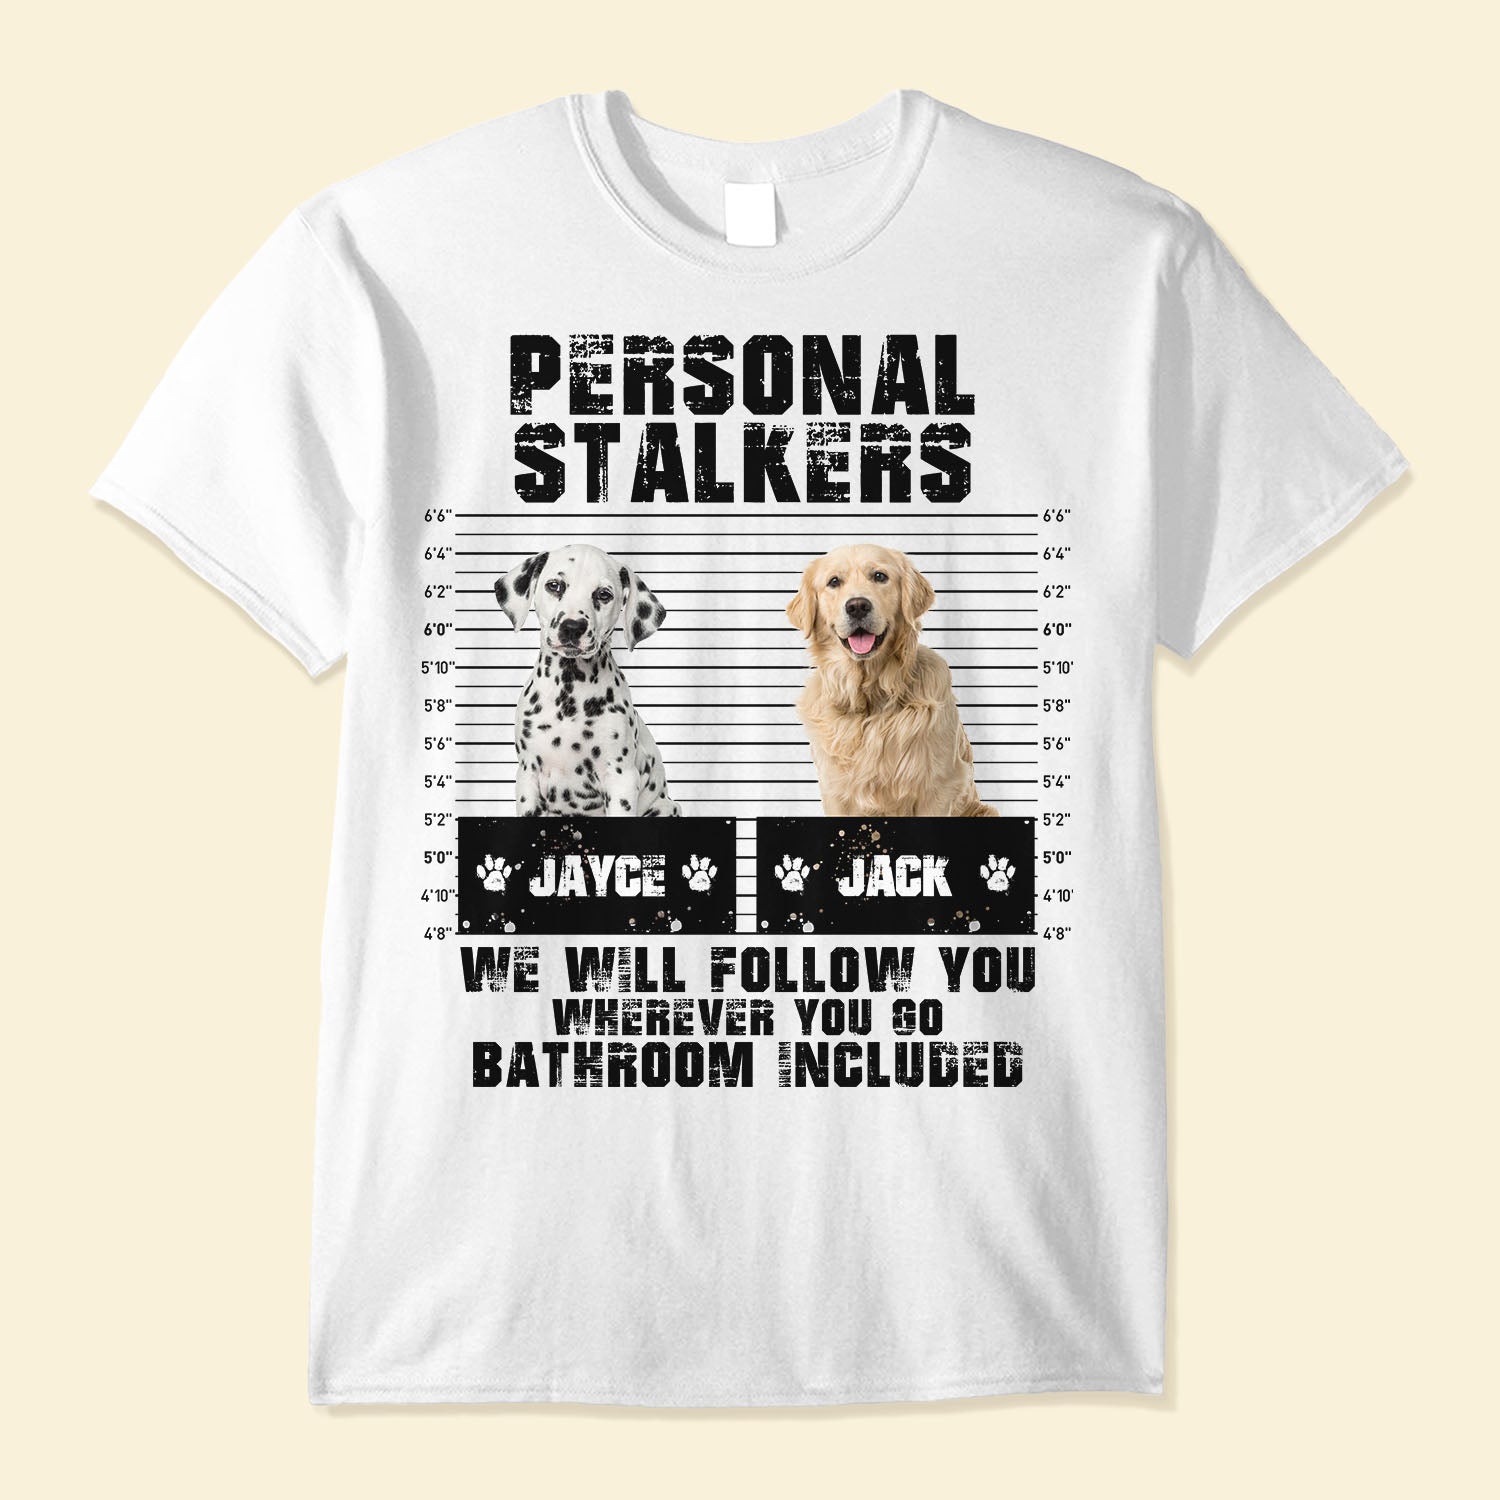 Personal Stalker Dog T-shirt, Gift for Dog Lovers